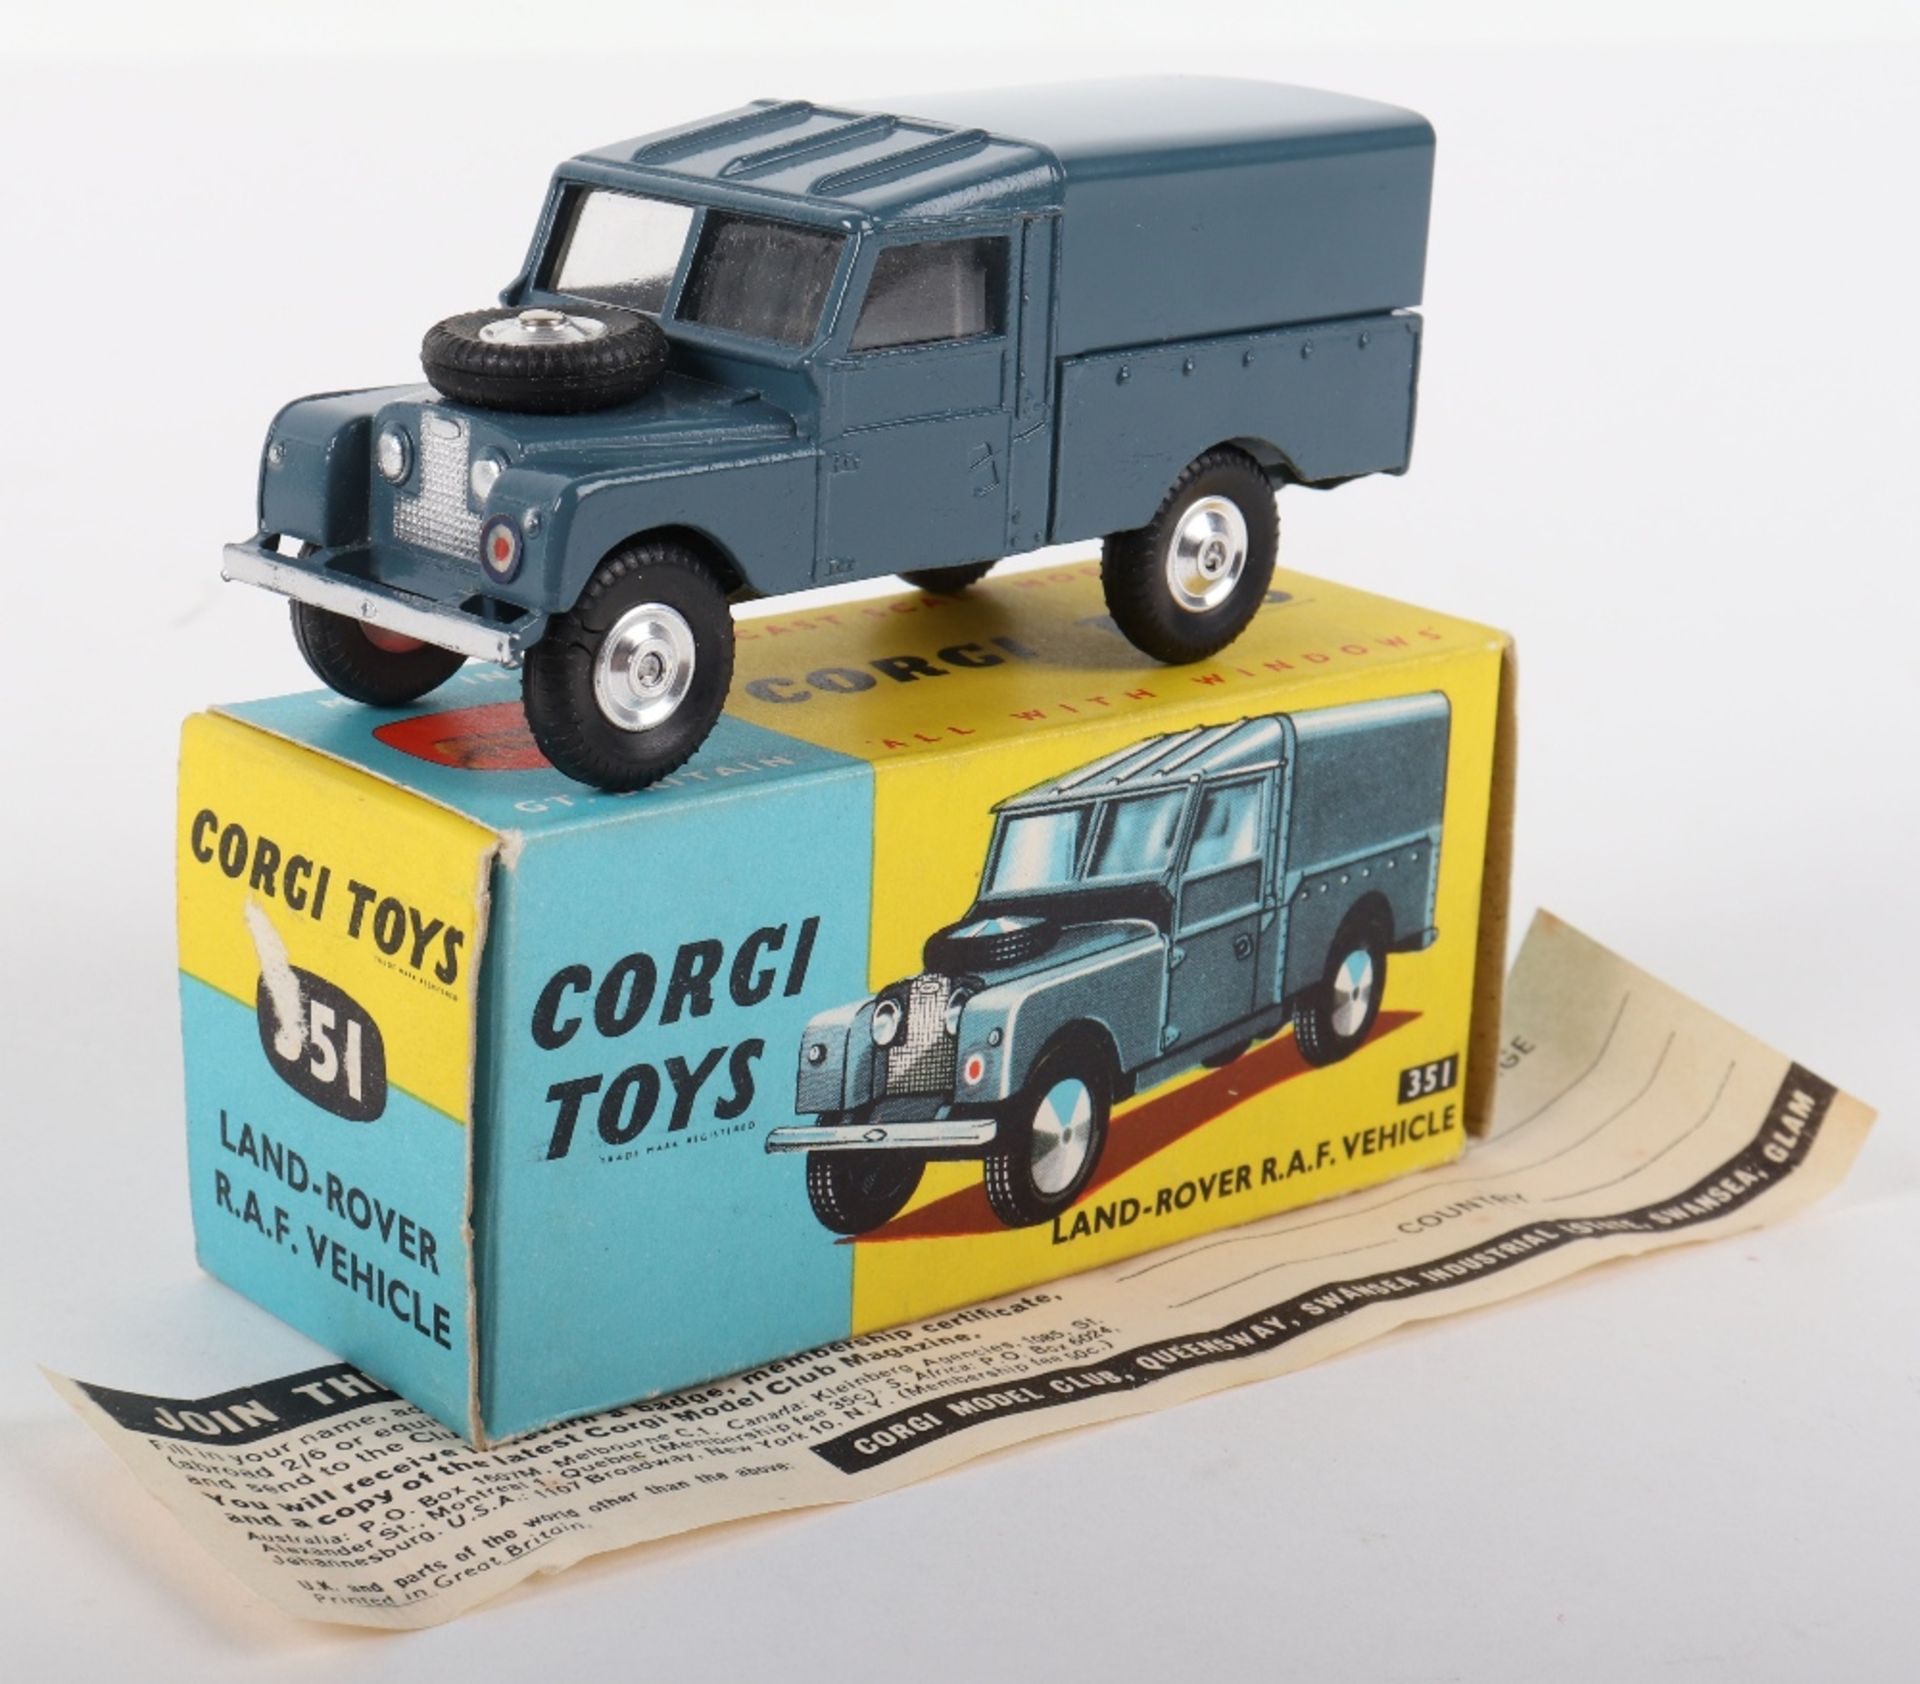 Scarce Corgi Toys 351 Land Rover R.A.F. Vehicle